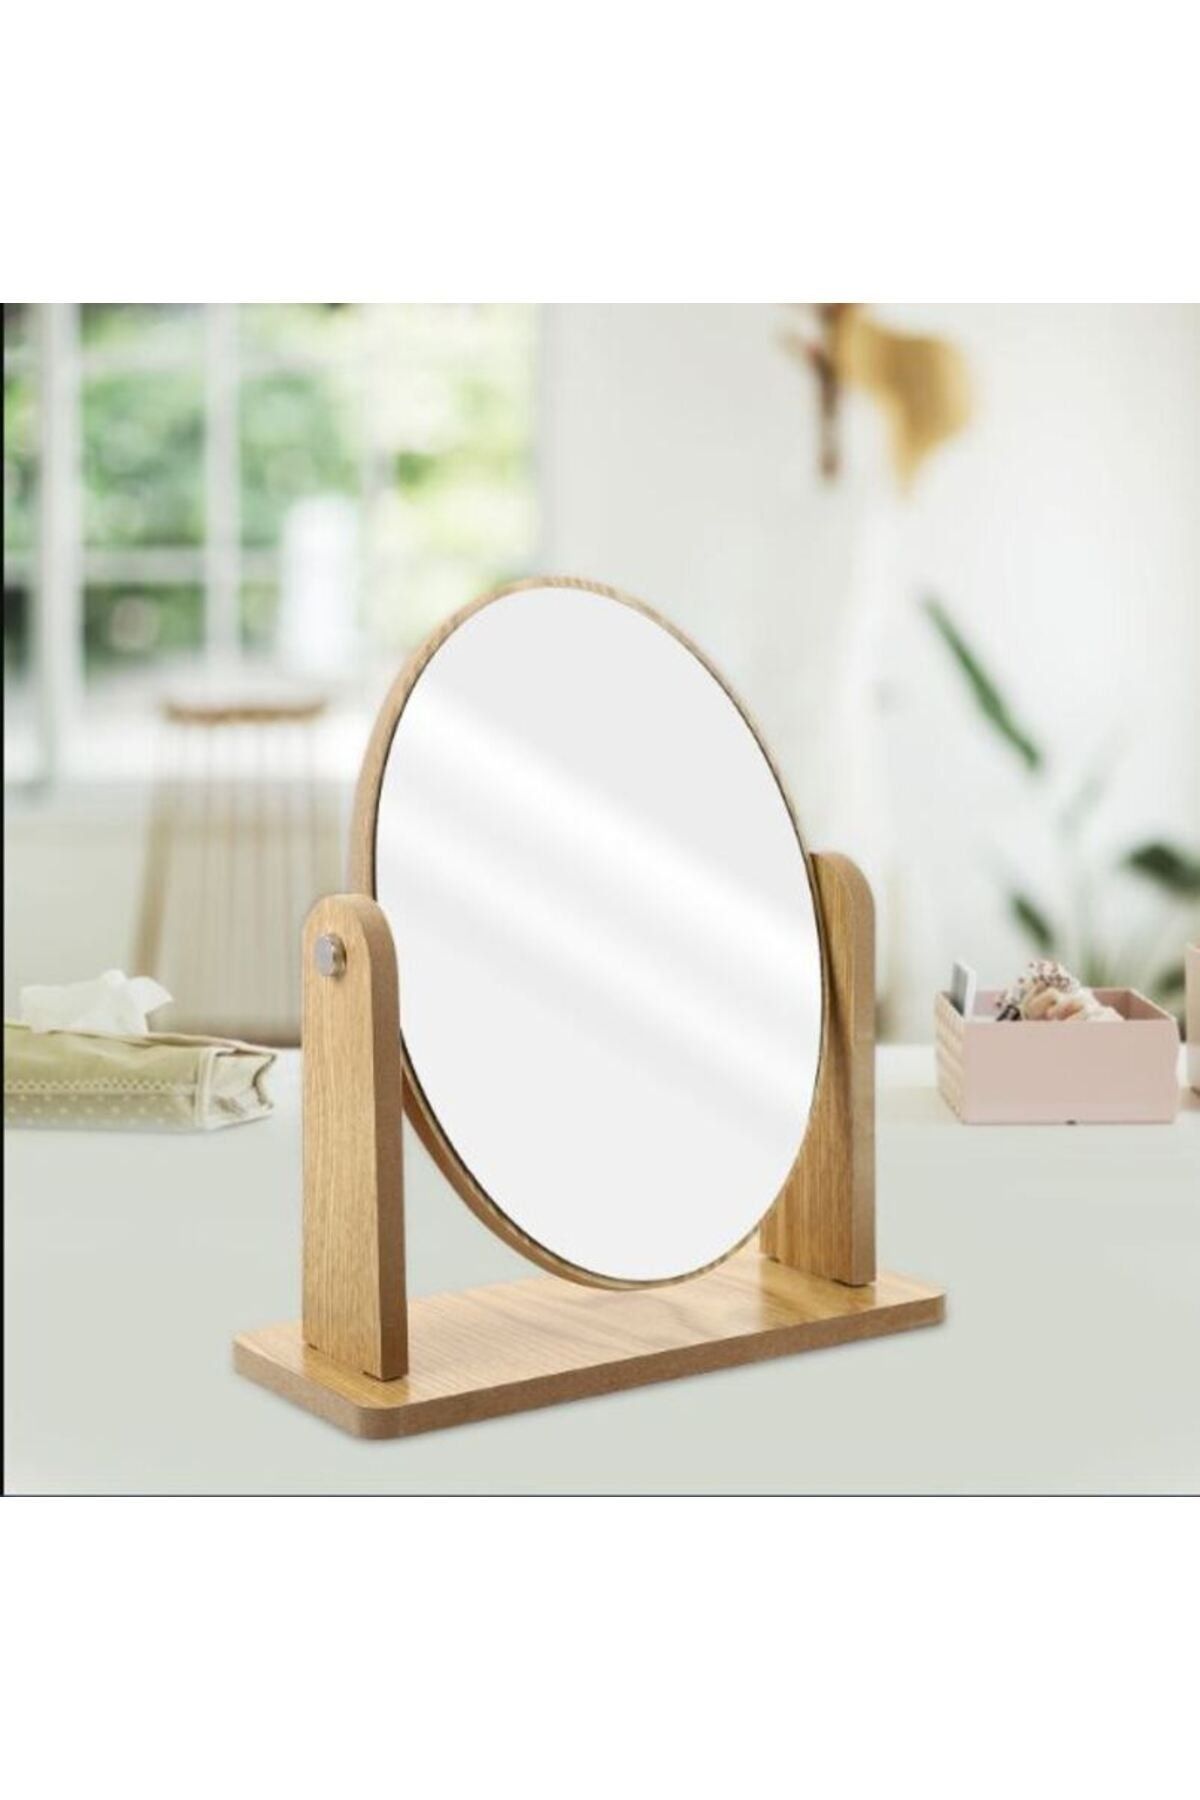 gaman Makyaj Aynası Ahşap Masa Aynası Oval Ayarlanabilir Makeup Mirror